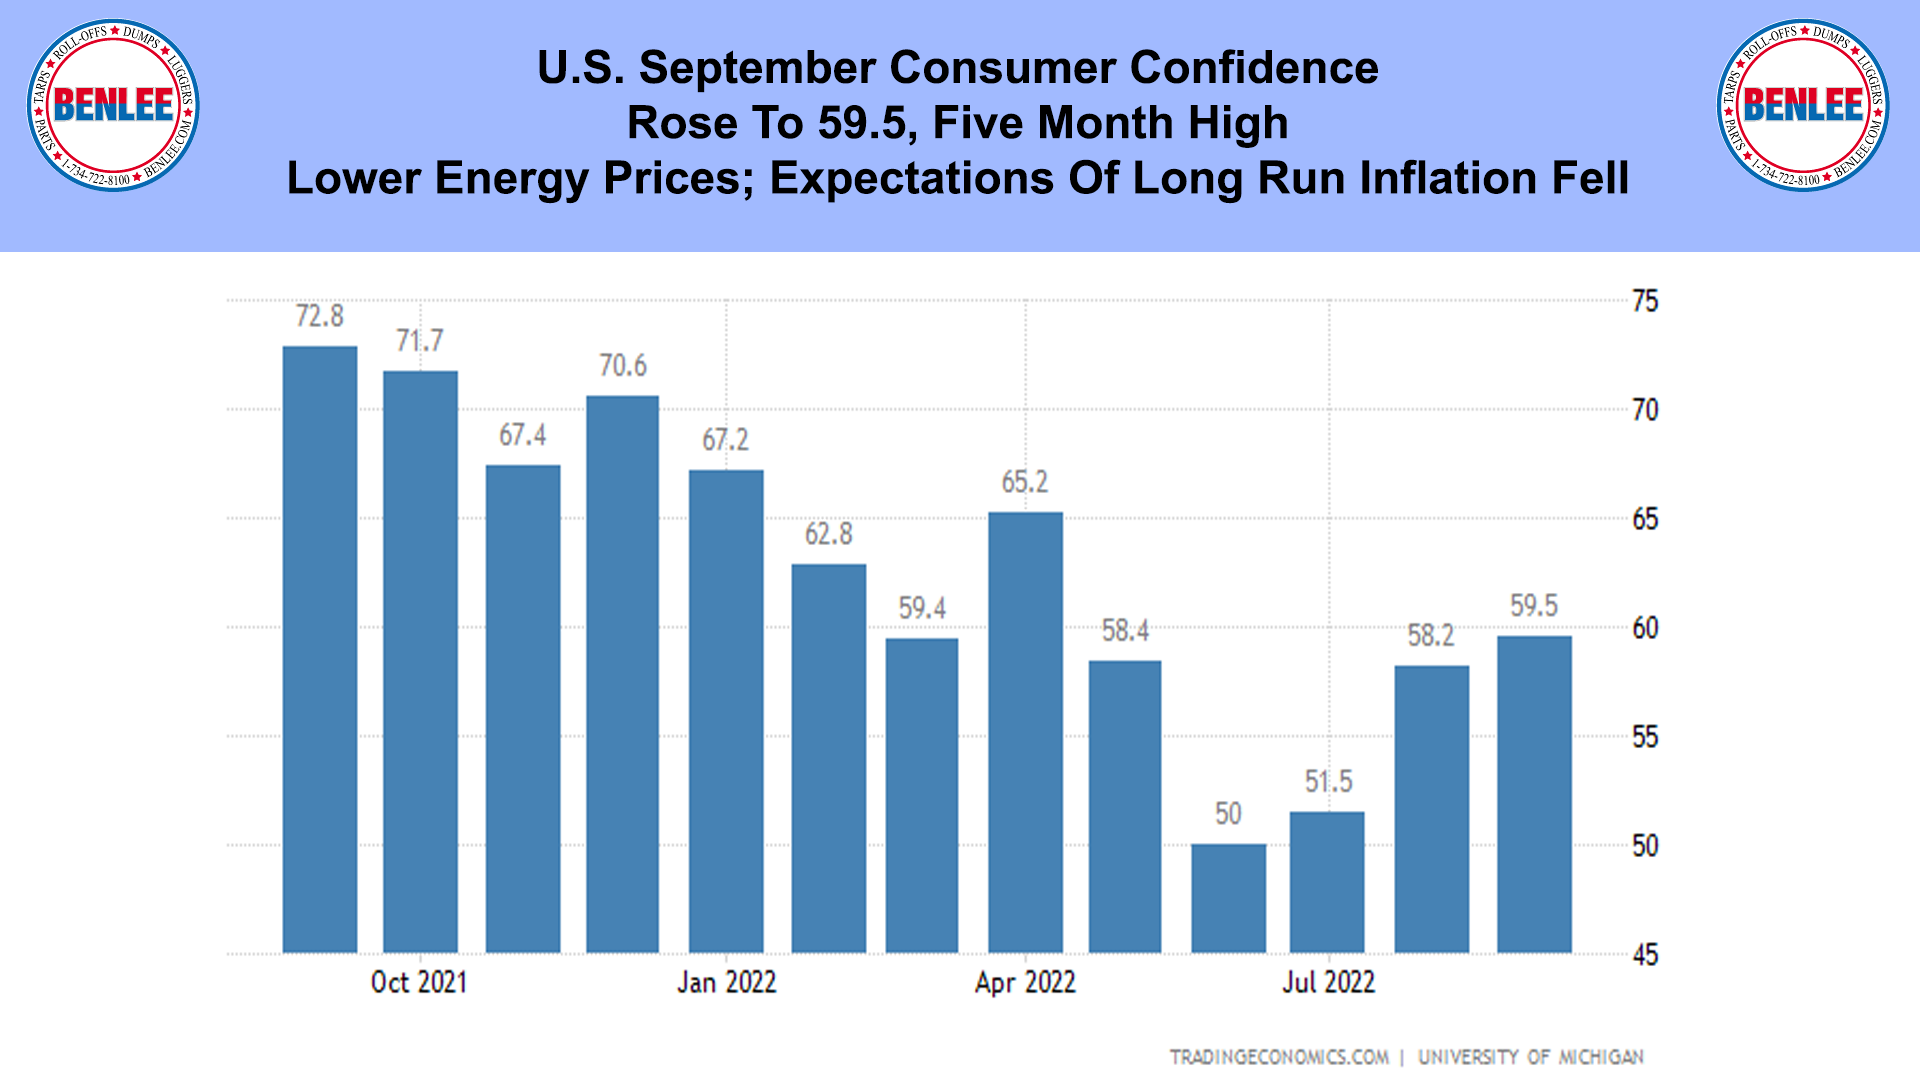 U.S. September Consumer Confidence